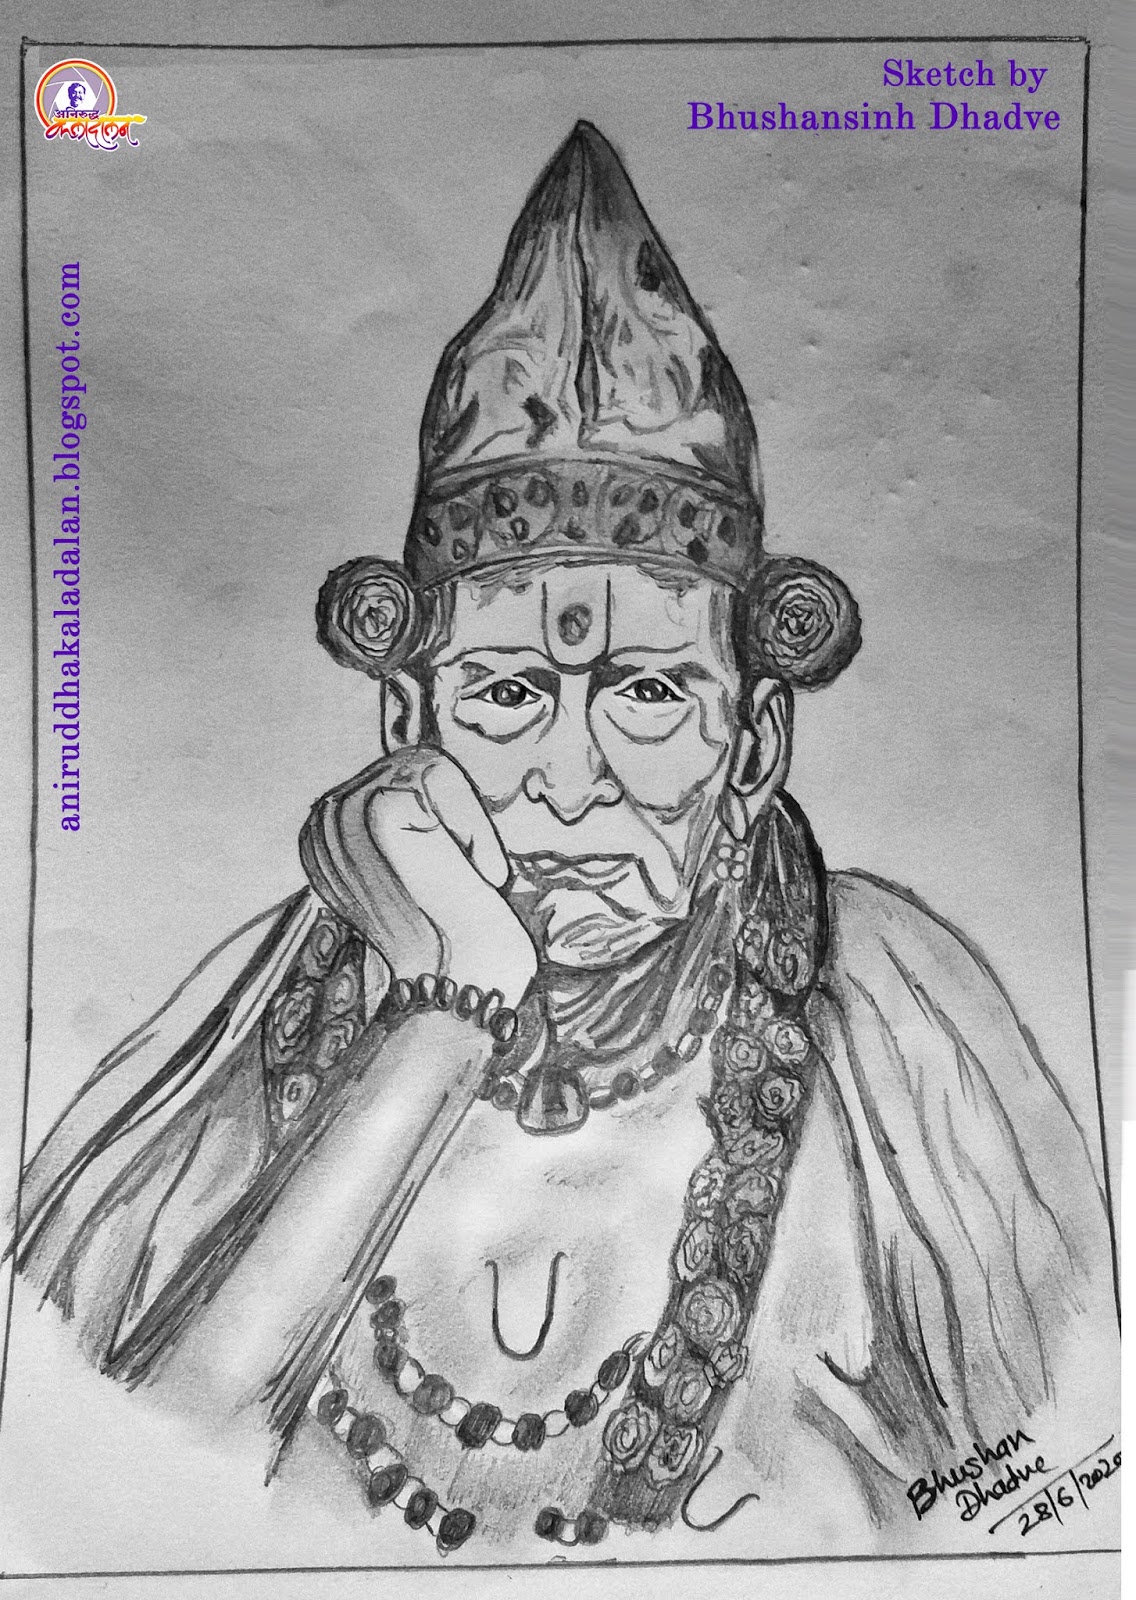 Buy Shri Swami Samarth, akkalkot Artwork at Lowest Price By Suvarna kulkarni